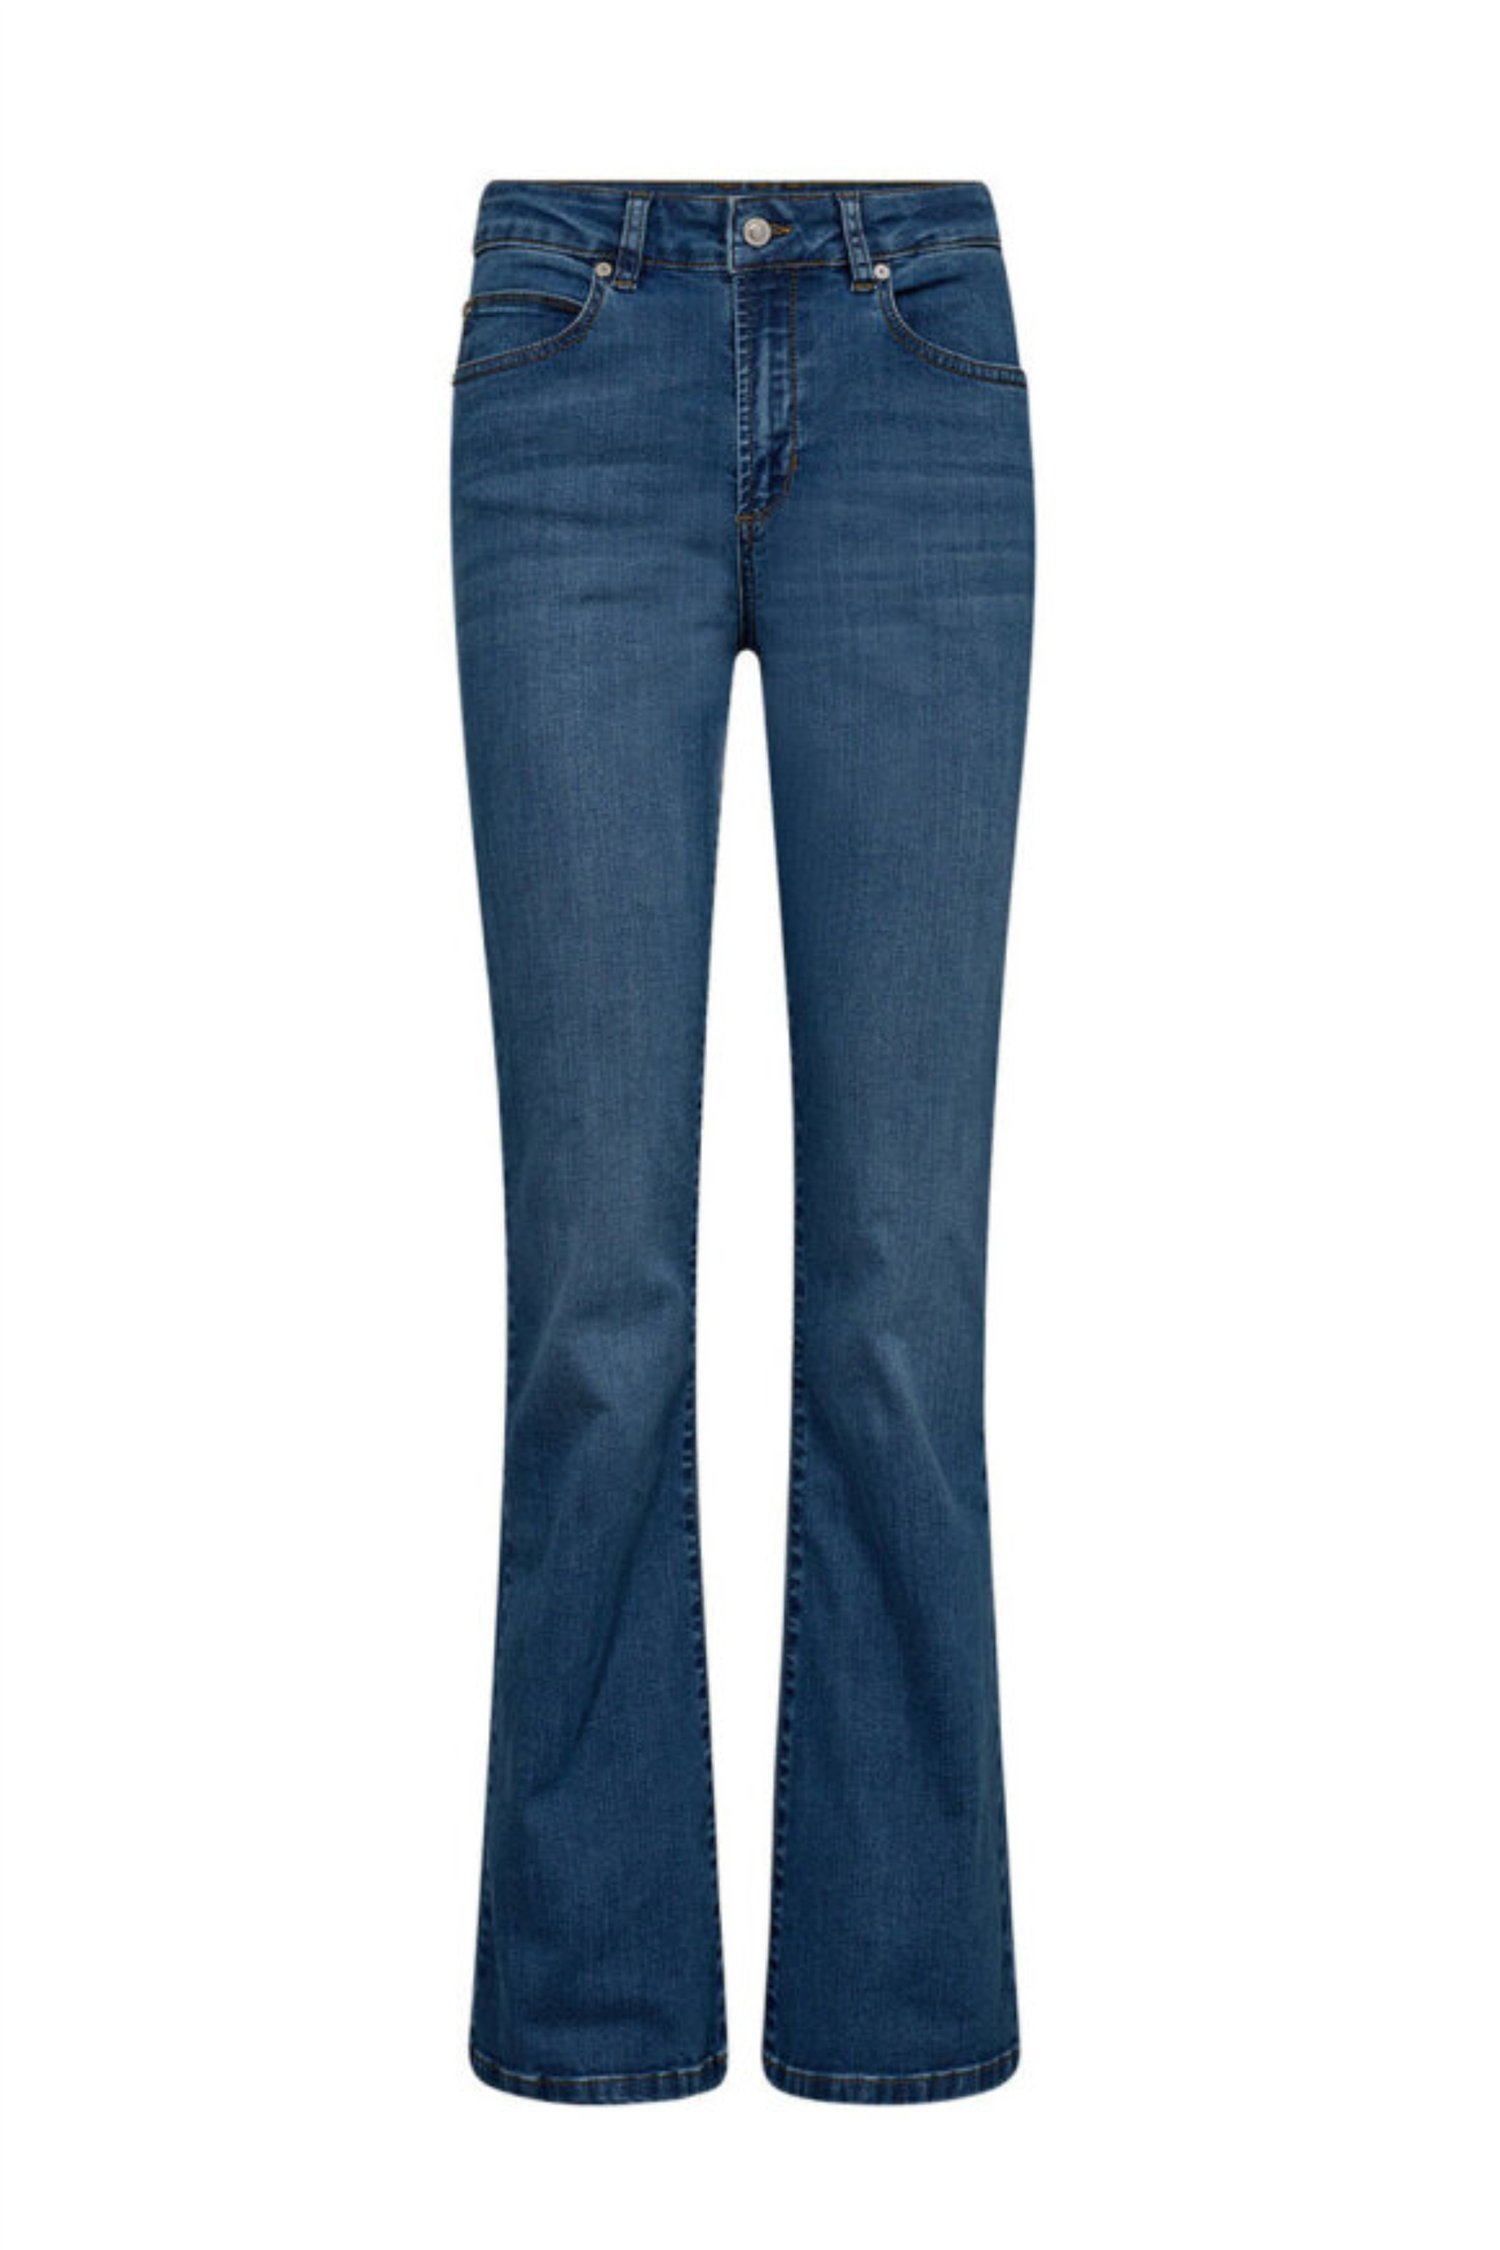 Tara Jeans Wash Original Vicky Denim Blue 30"